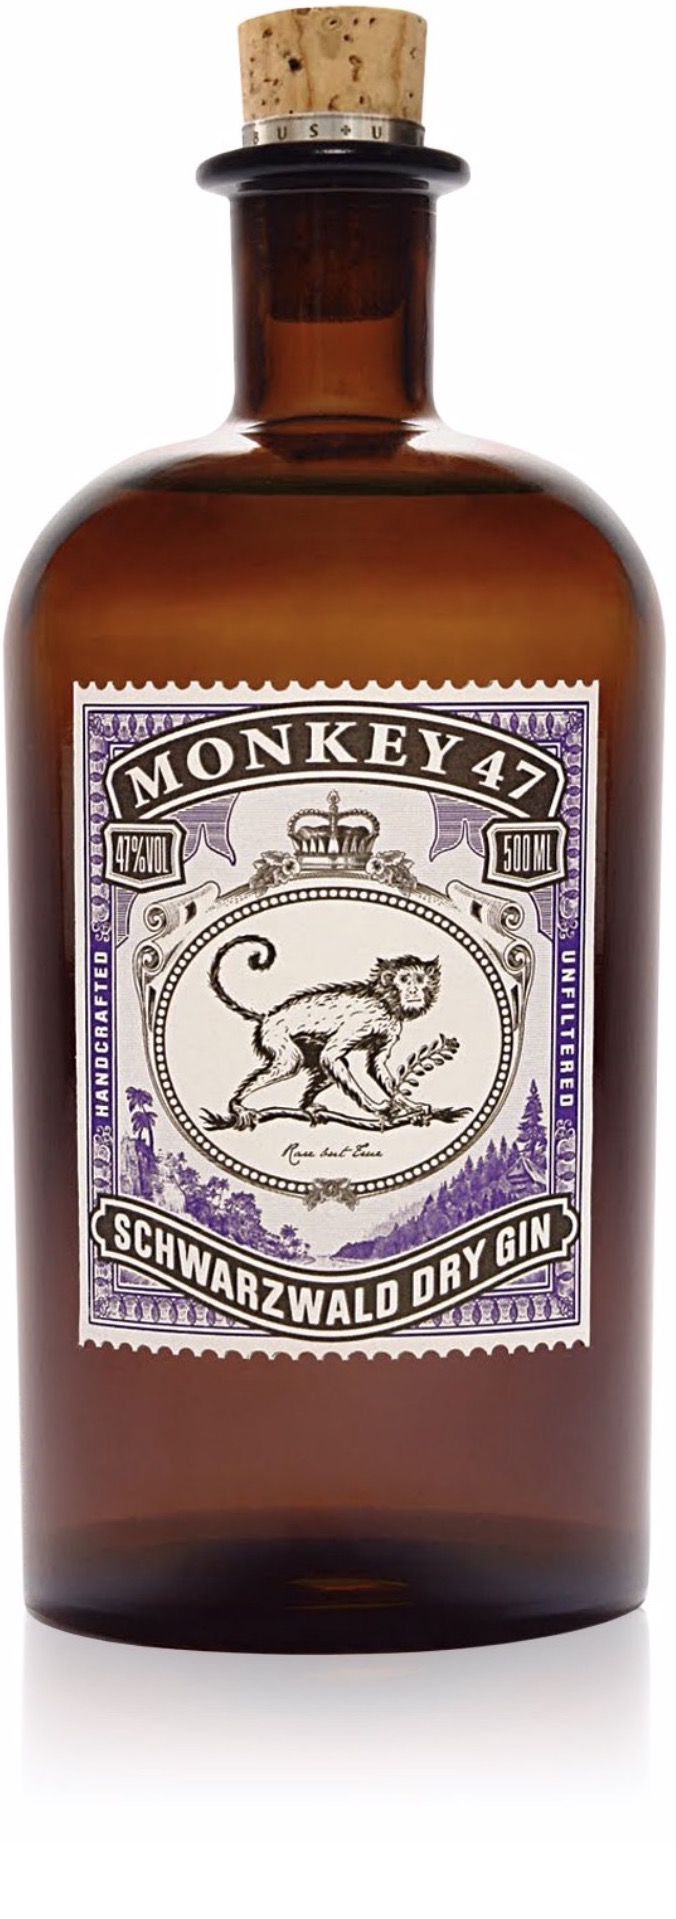 Monkey 47 Schwarzwald Dry Gin 47 % vol 0,5L